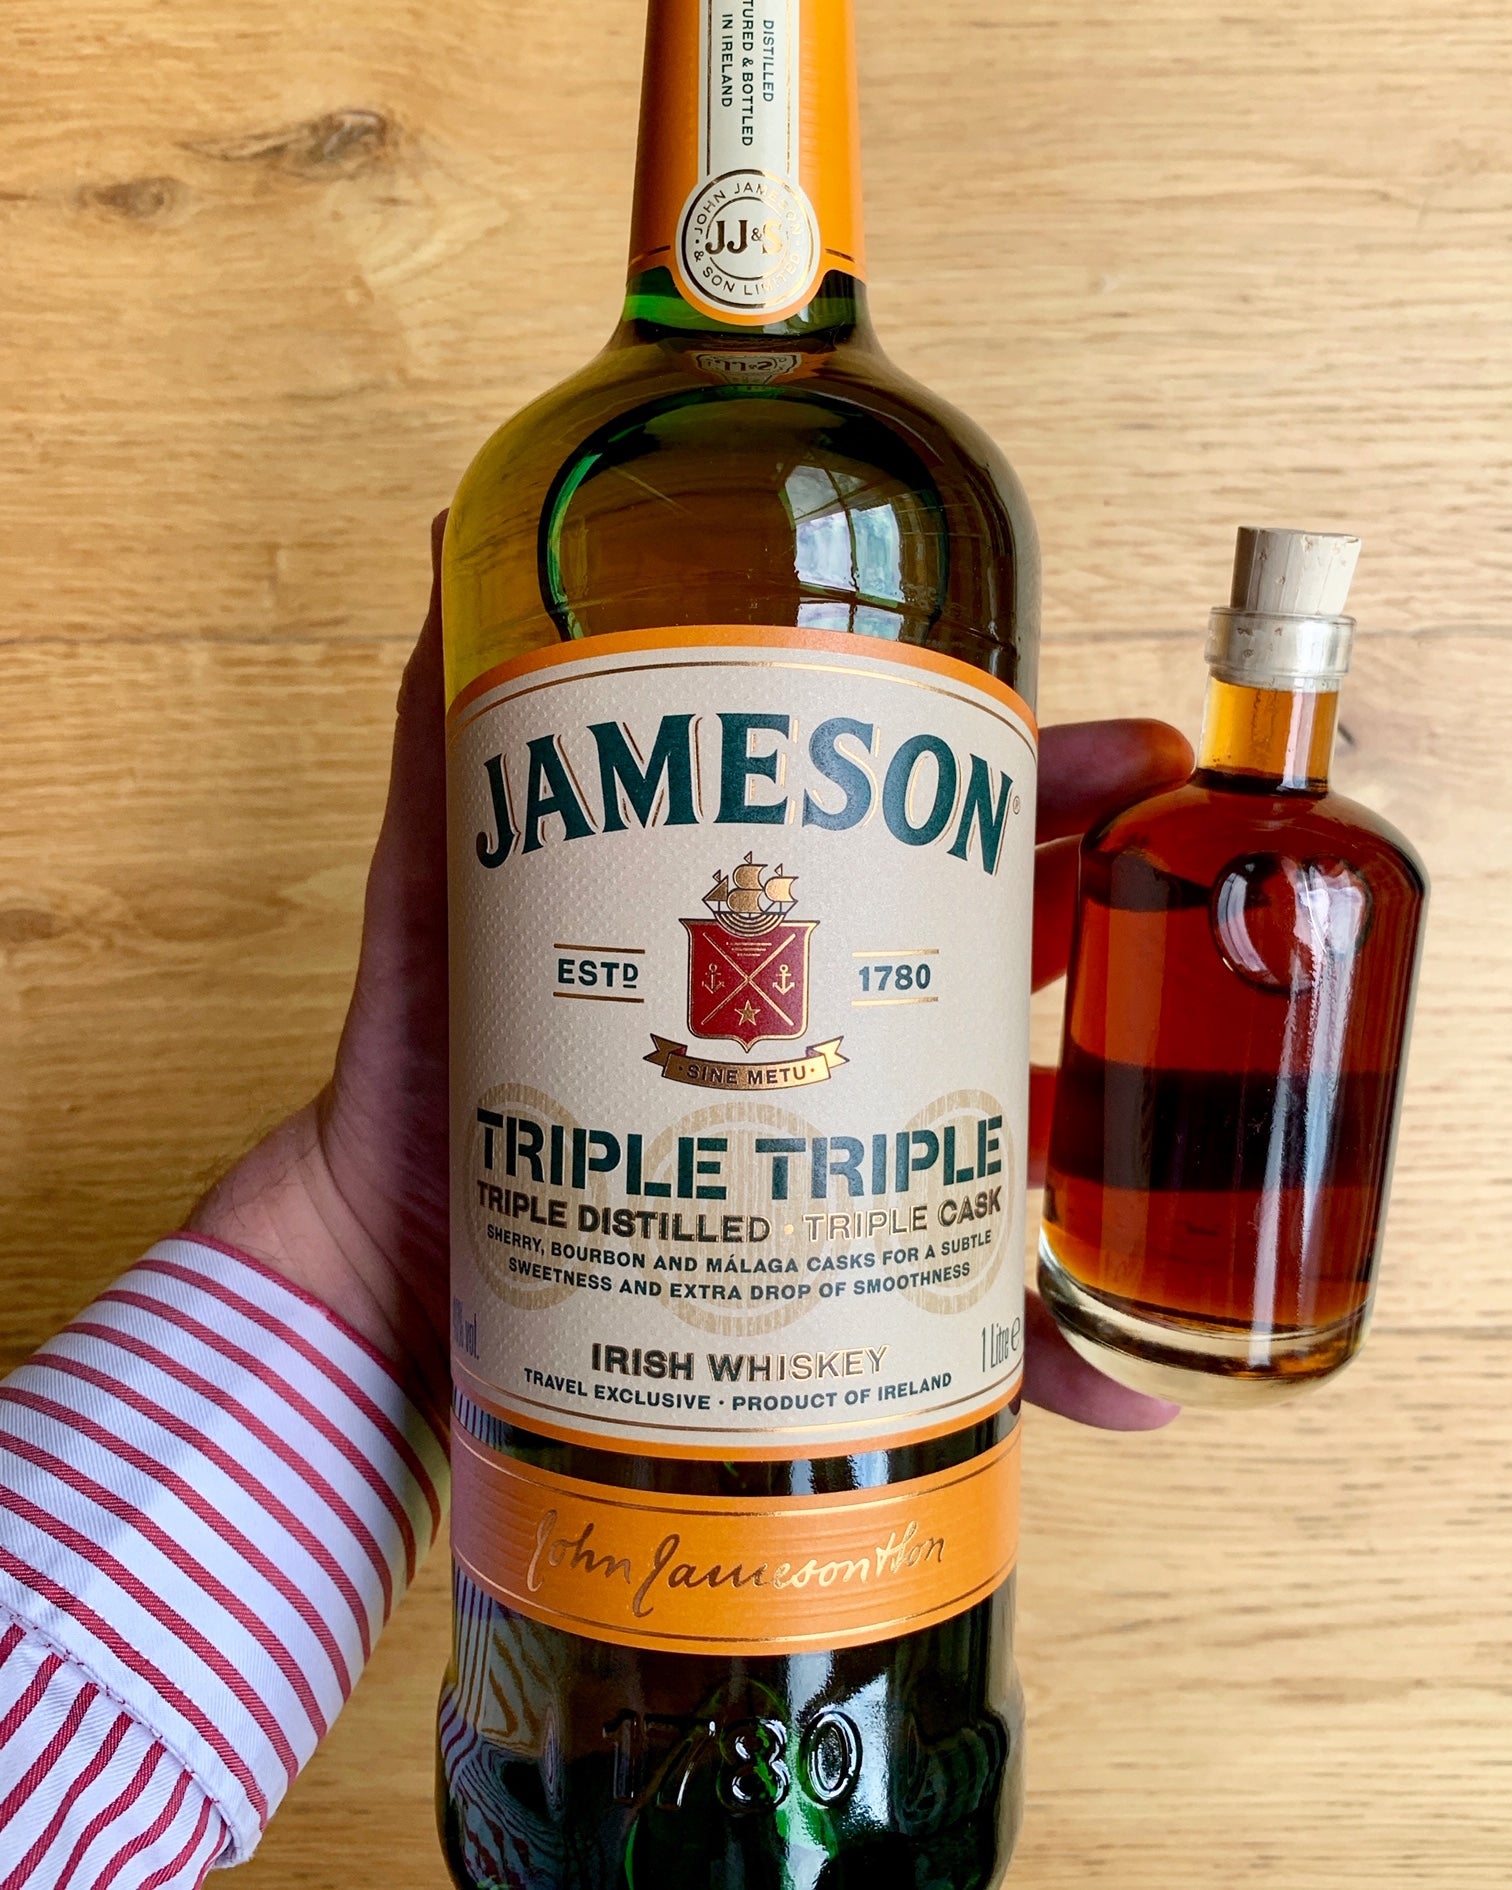 Jameson Triple Triple Irish Whiskey